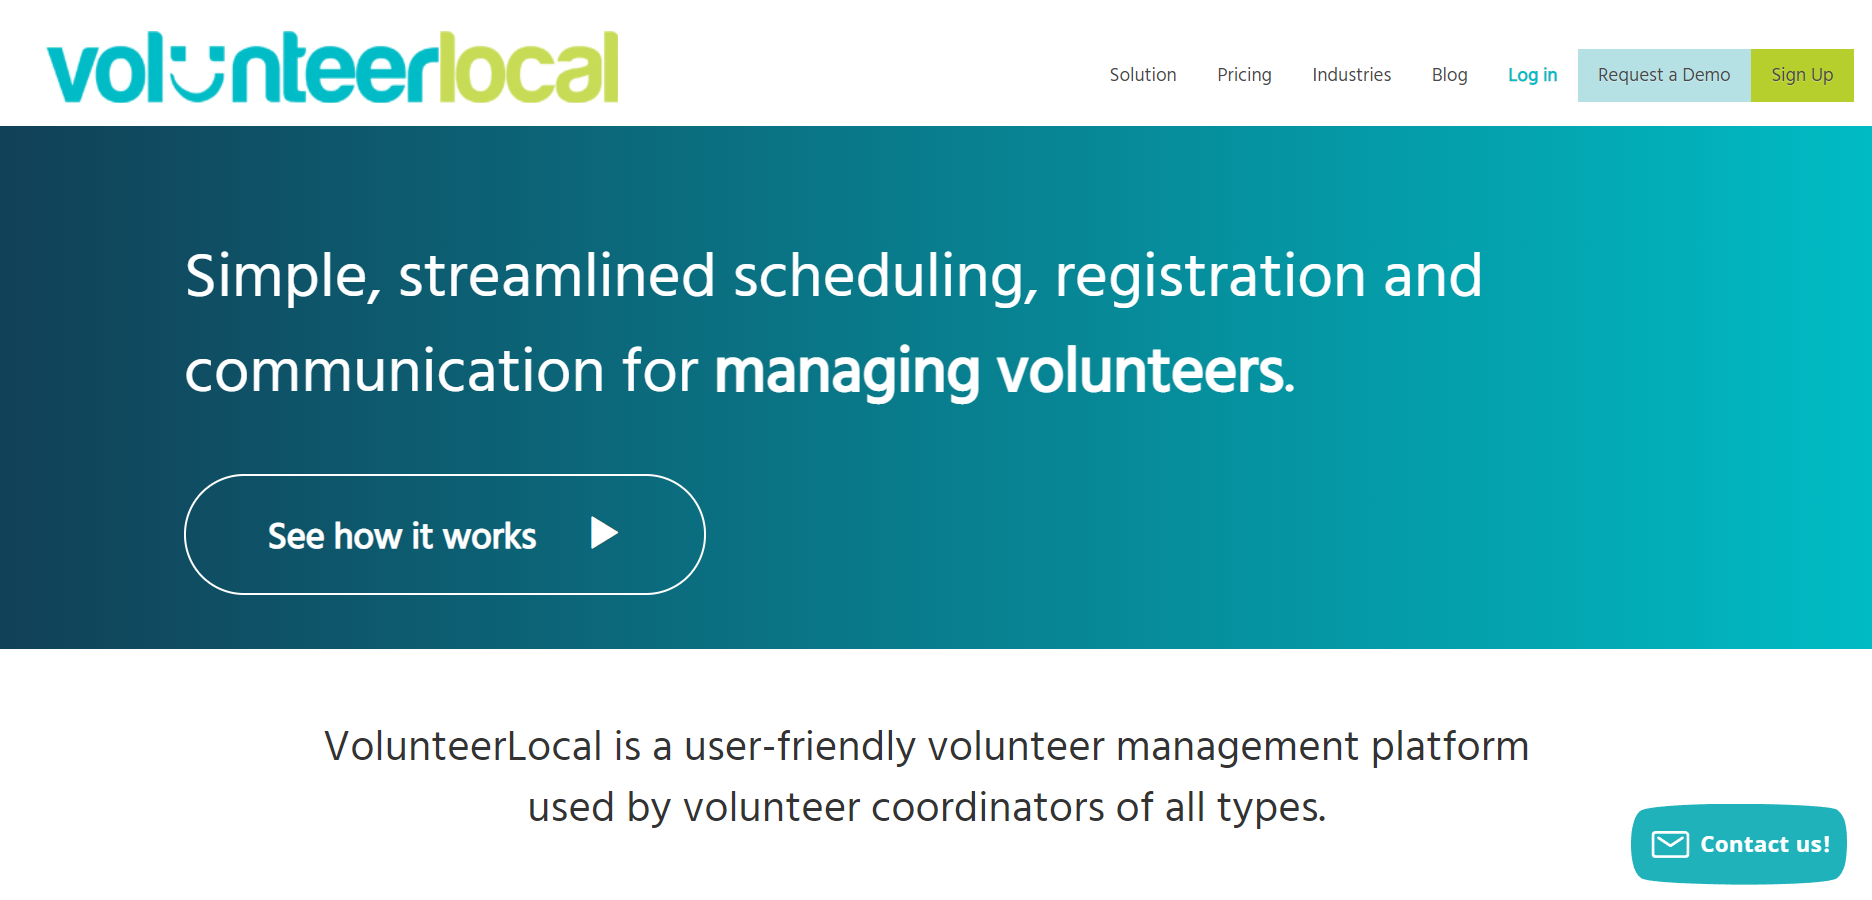 VolunteerLocal offers a powerful volunteer management tool.